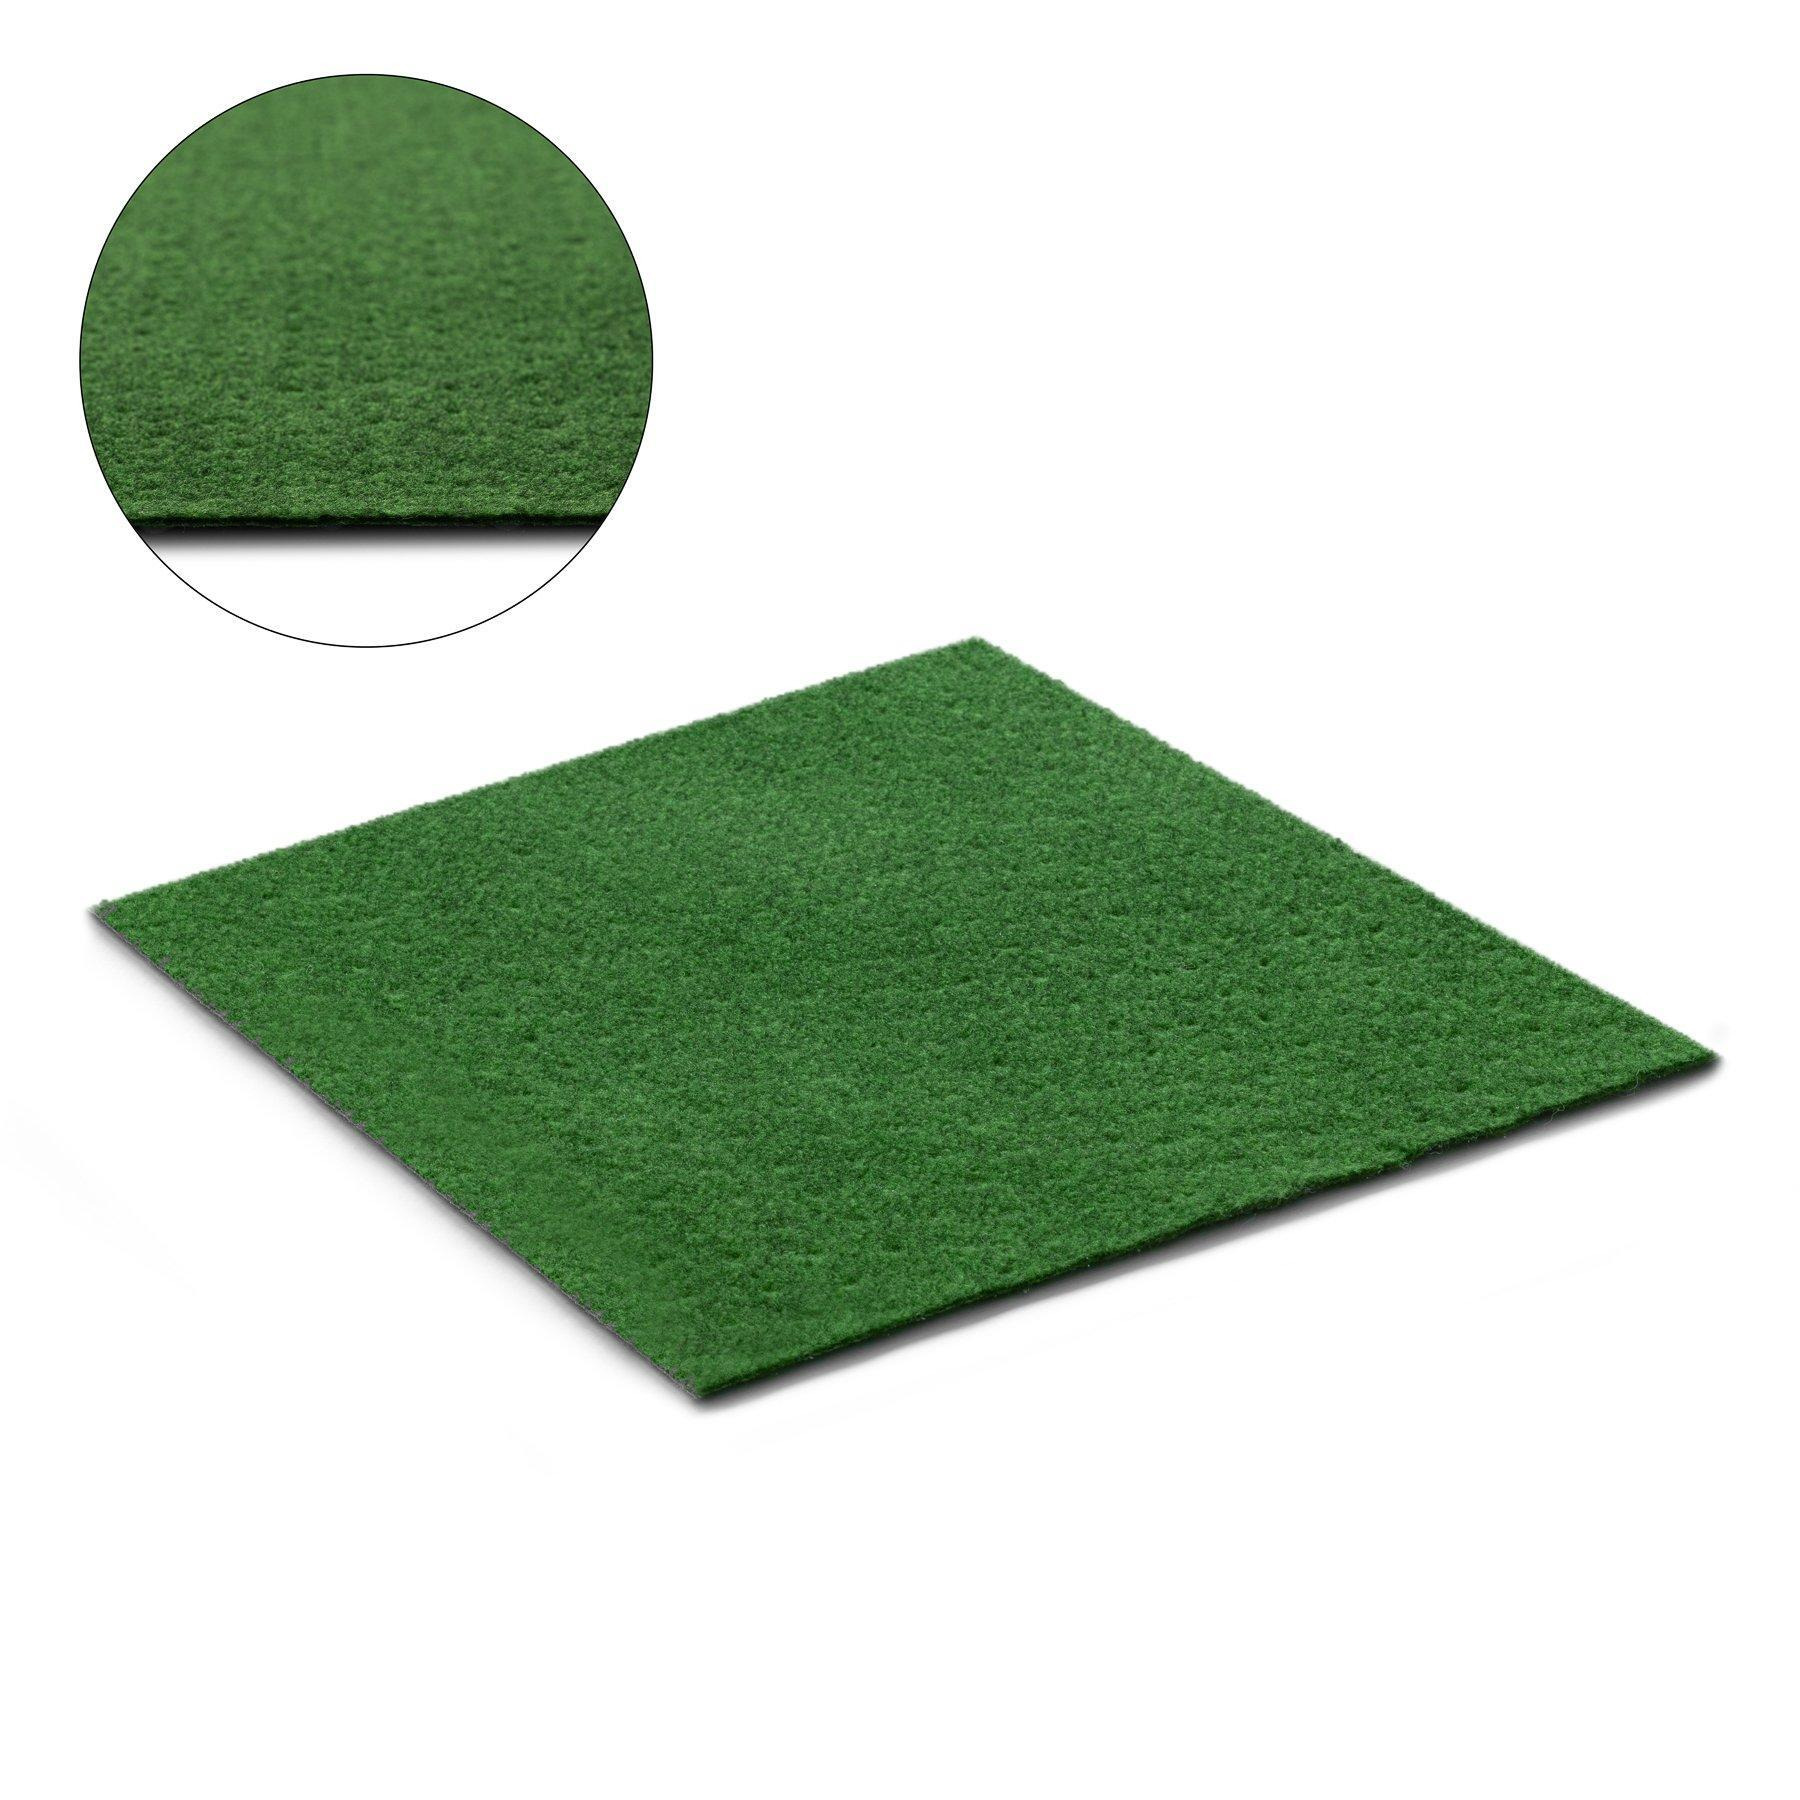 Artificial Grass Patio Rug - image 1